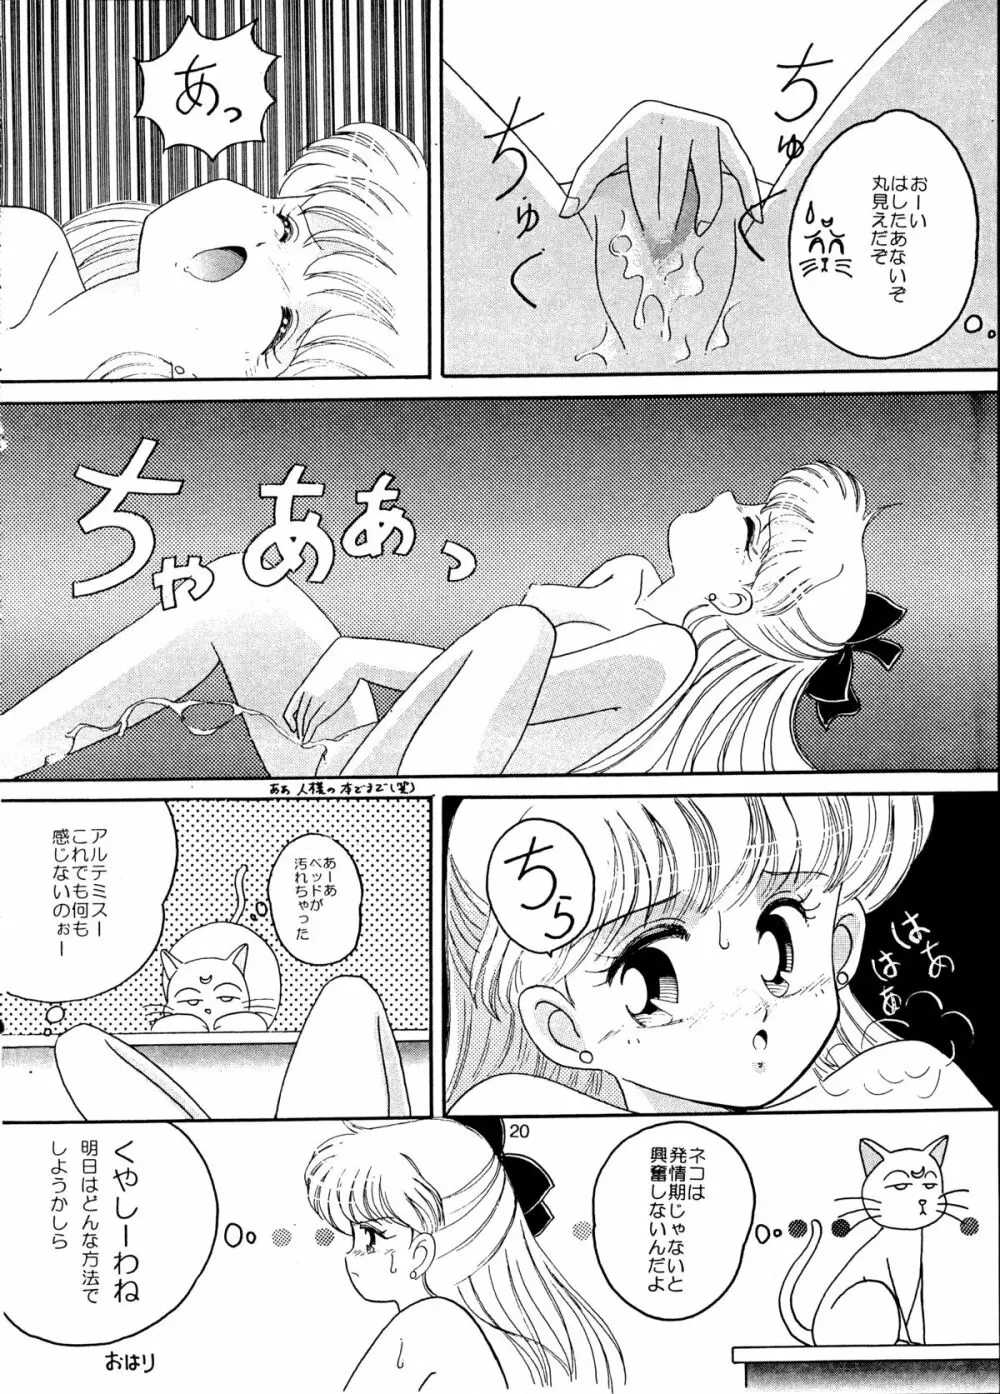 I KNOW MINAKO - page20